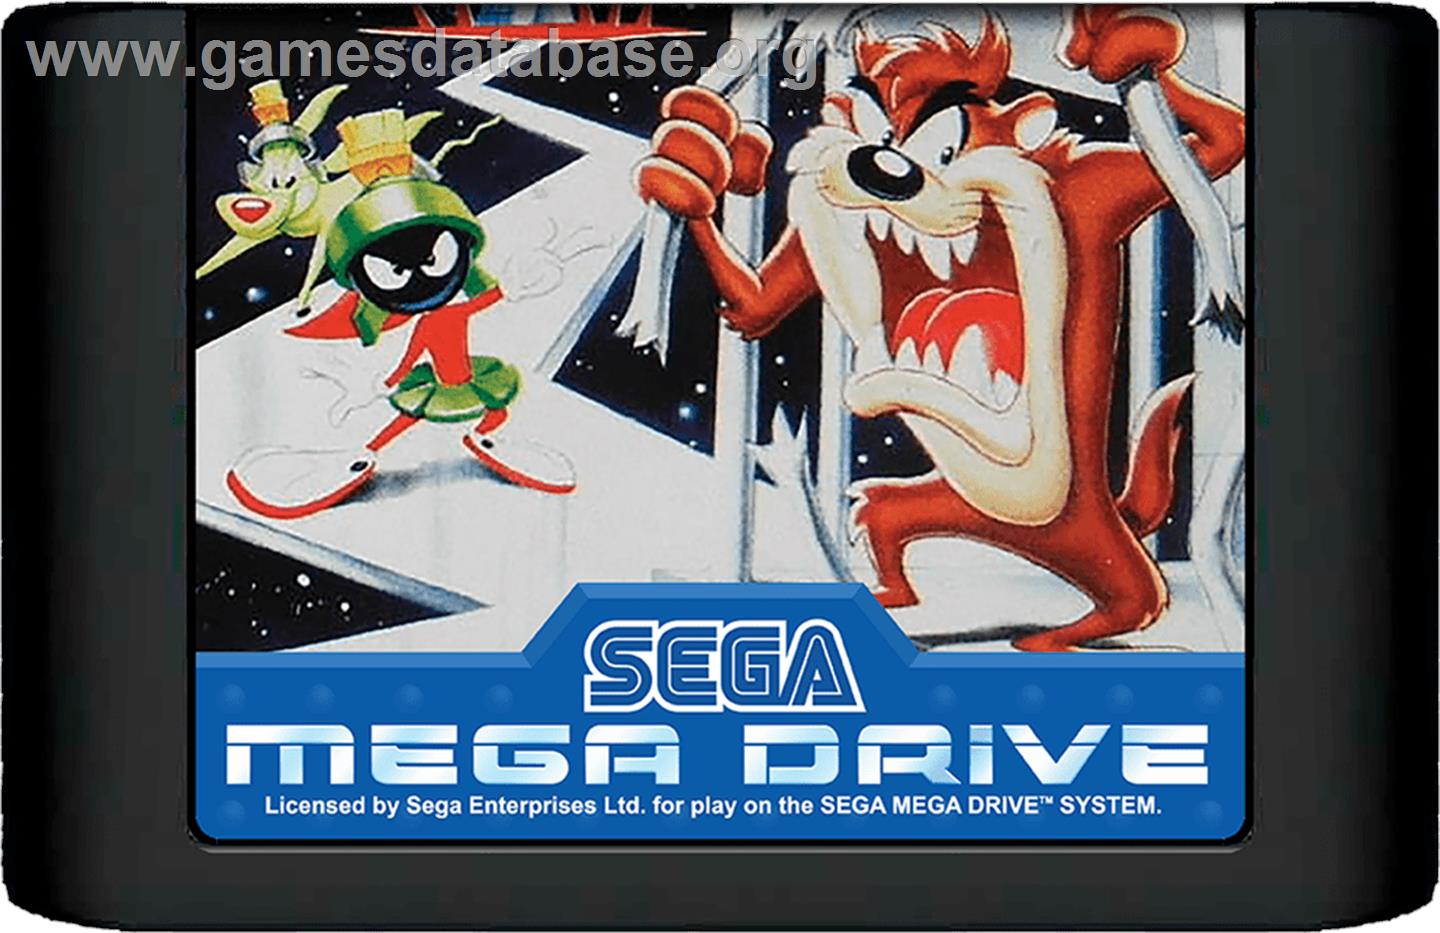 Taz in Escape from Mars - Sega Genesis - Artwork - Cartridge